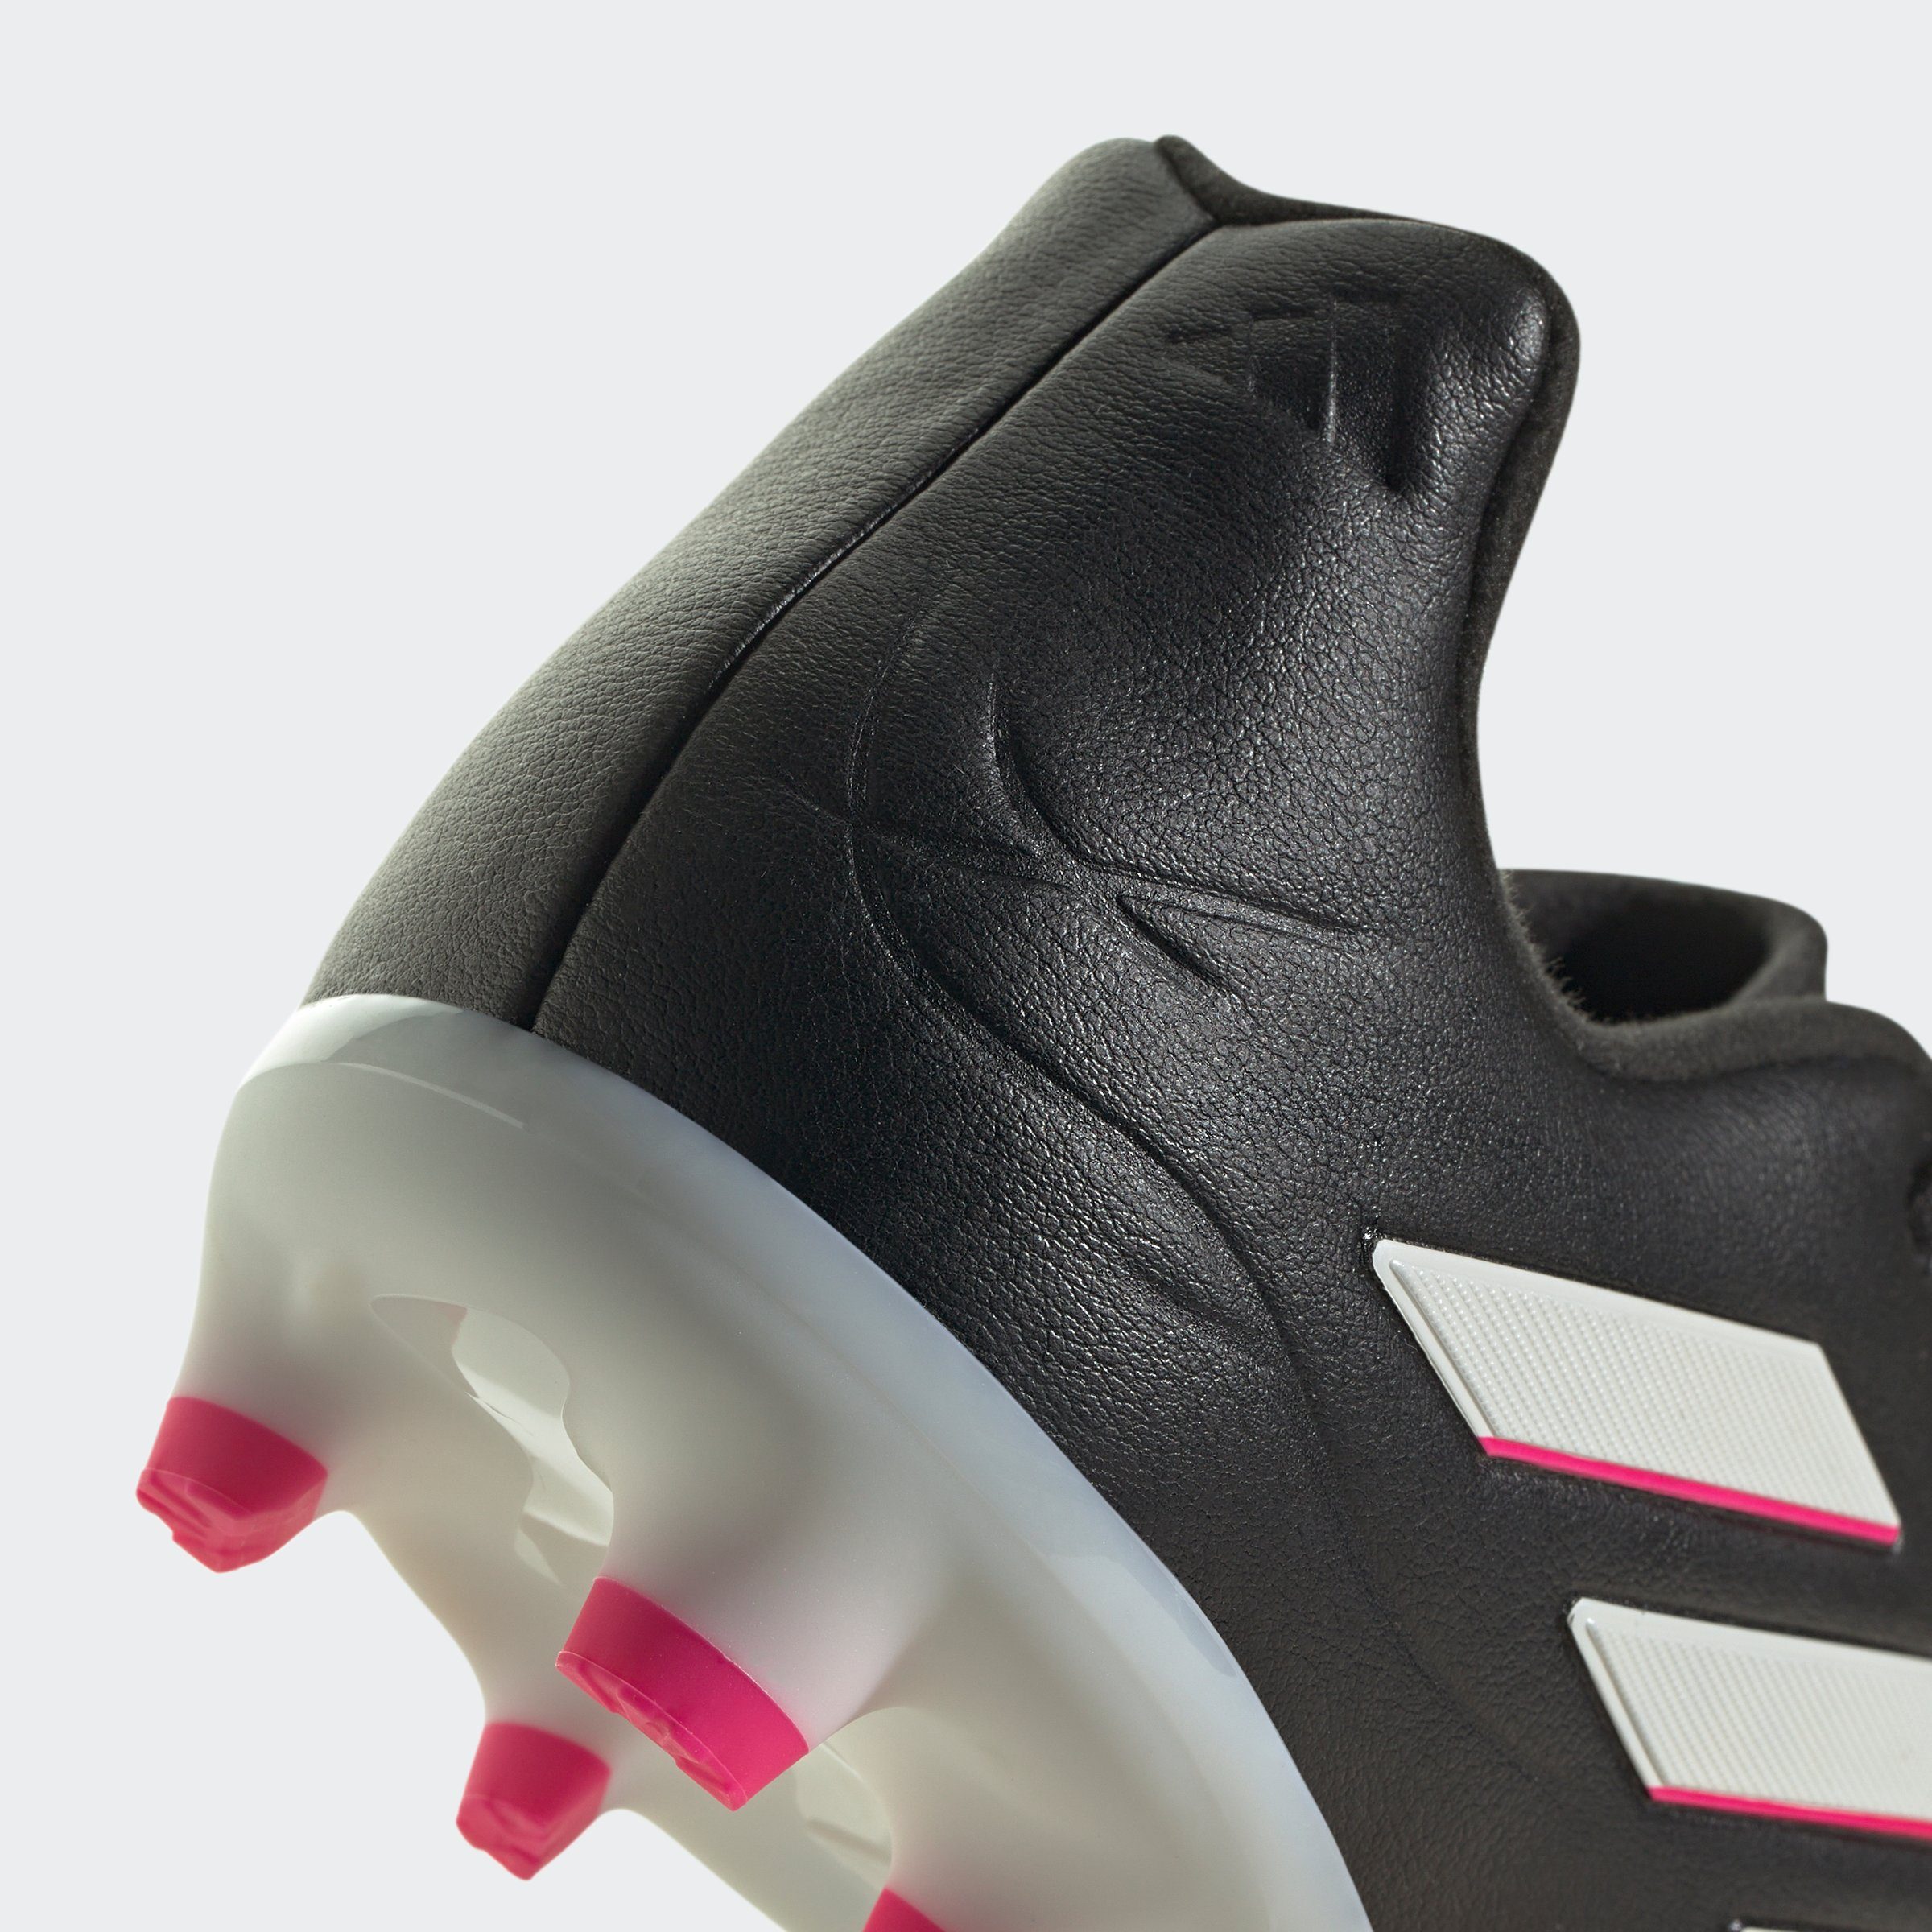 Metallic Core COPA PURE.3 Pink Shock Zero / Black Fußballschuh 2 adidas Performance FG / Team